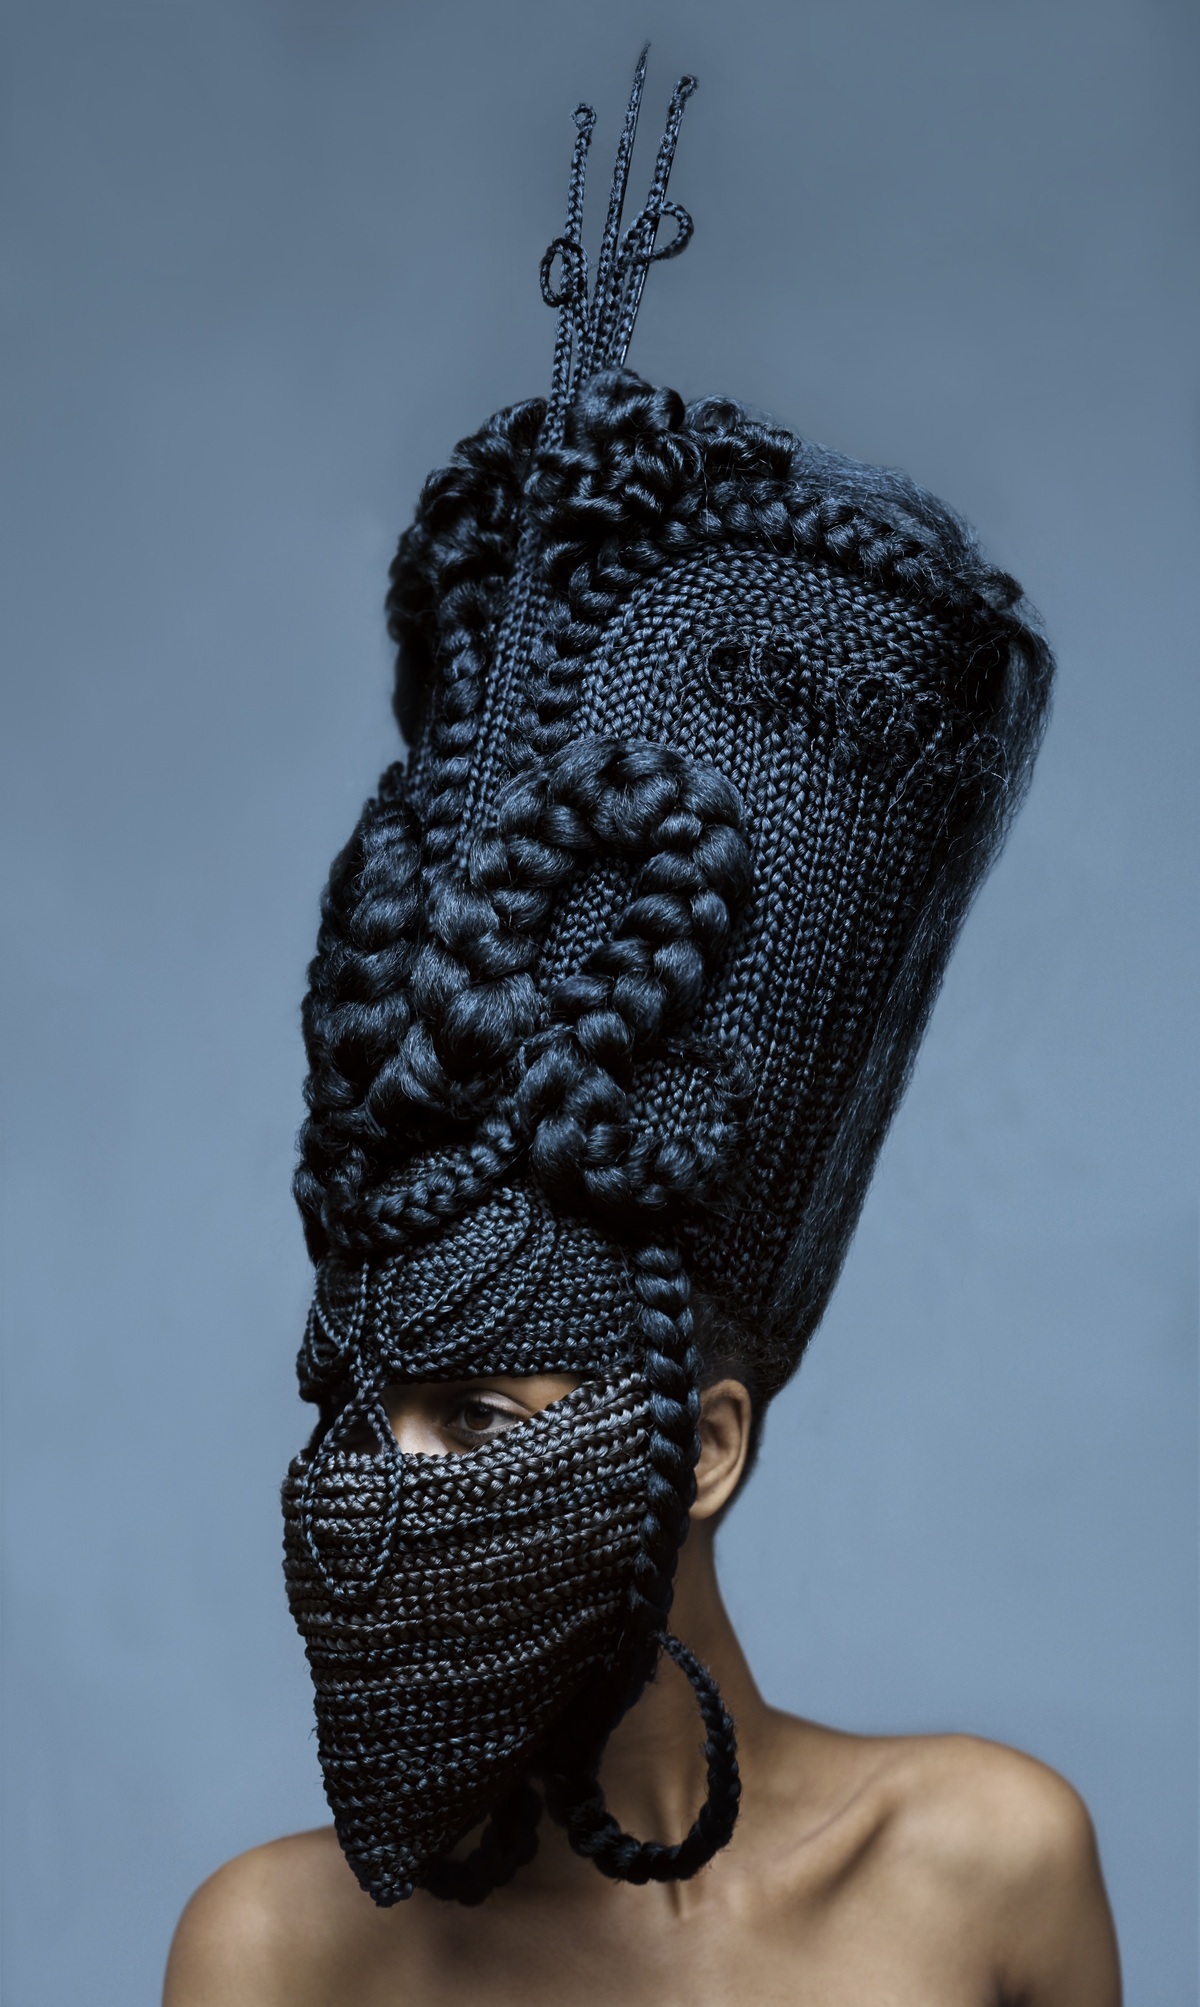 black venus, somerset house, exhibition, black women, womanhood, art